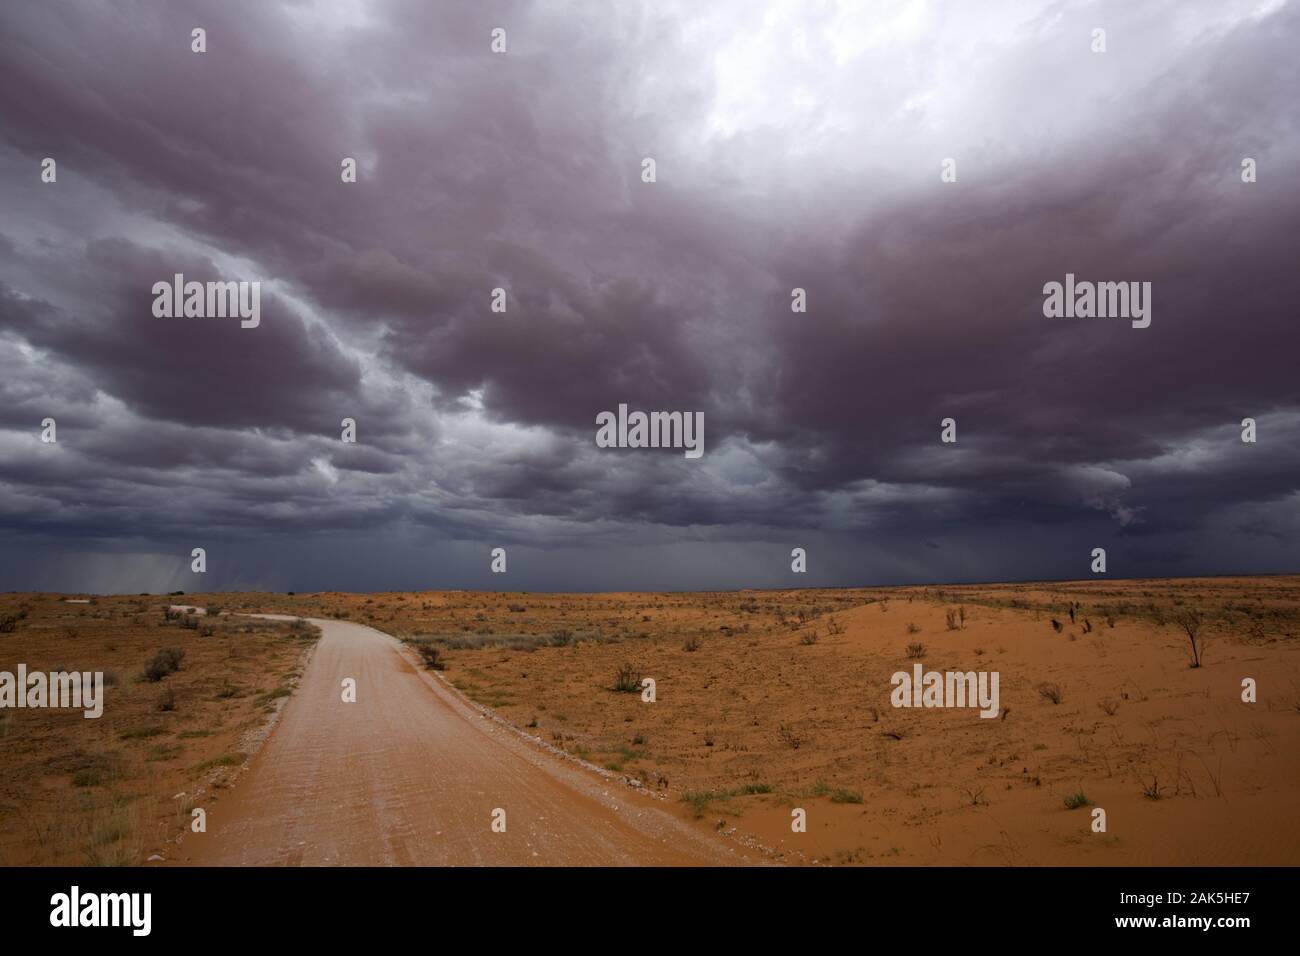 Kgalagadi Transfrontier National Park : Gewitterwolken ueber der Kalahari, Suedafrika | conditions dans le monde entier Banque D'Images